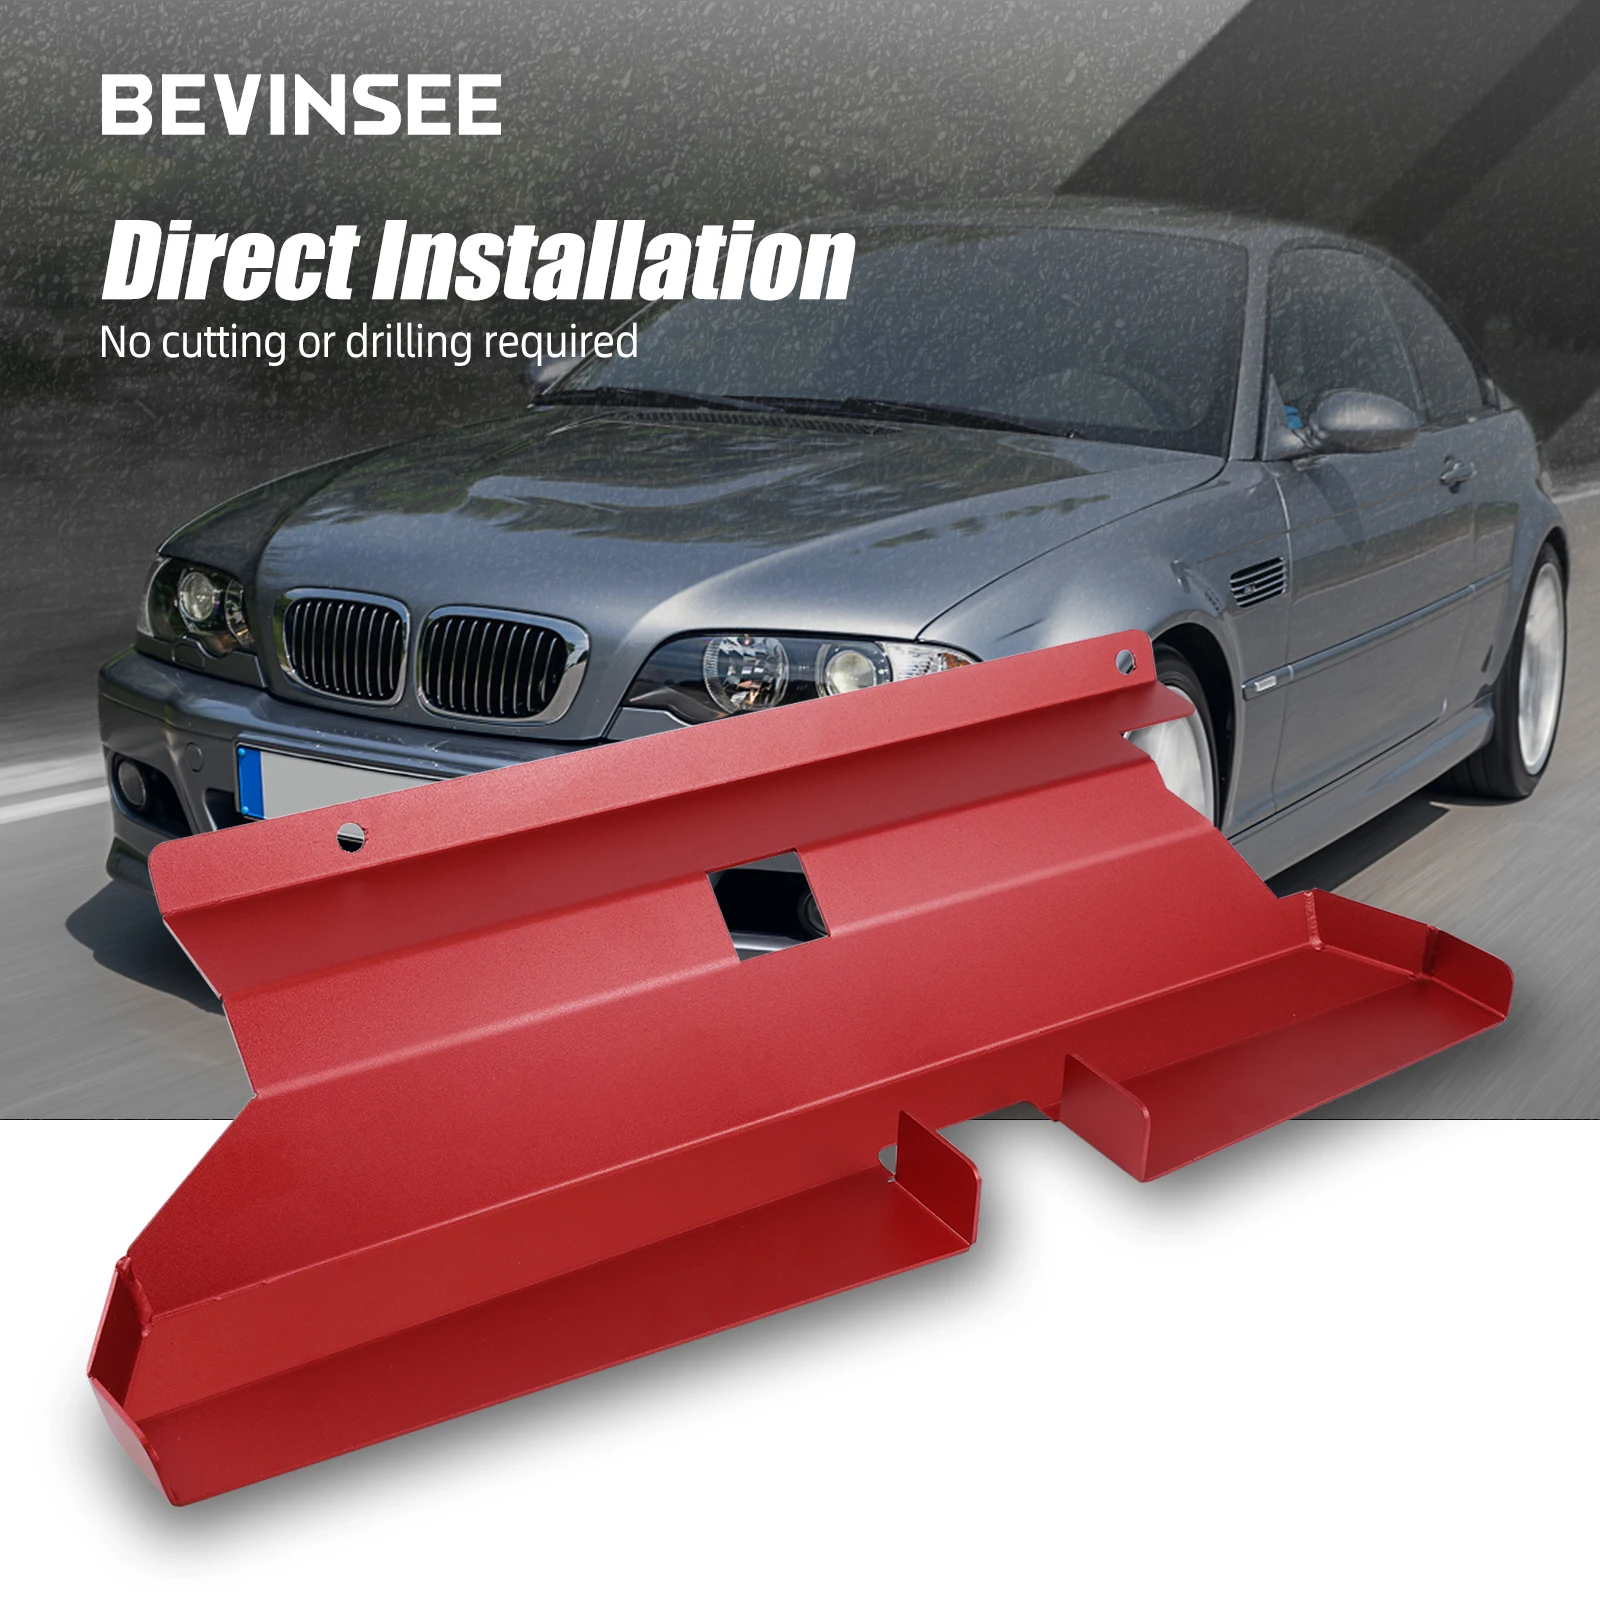 BEVINSEE Cold Air Intake Scoops For BMW E46 323i 325i 328i 330i 320ci 325ci 325xi 325ti 328ci 330ci M52TU M54